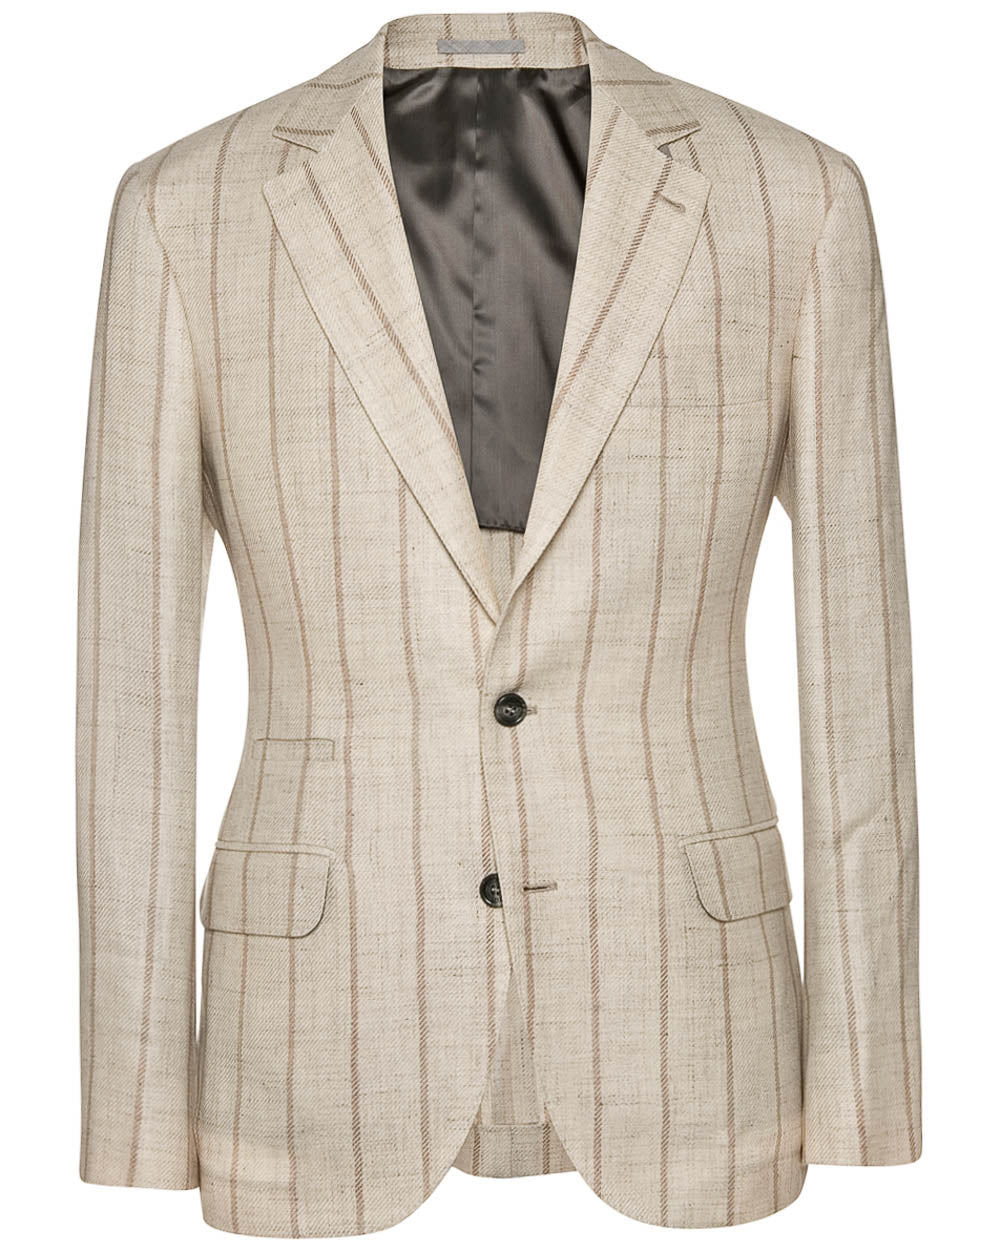 Cream Melange with Brown Stripe Suit